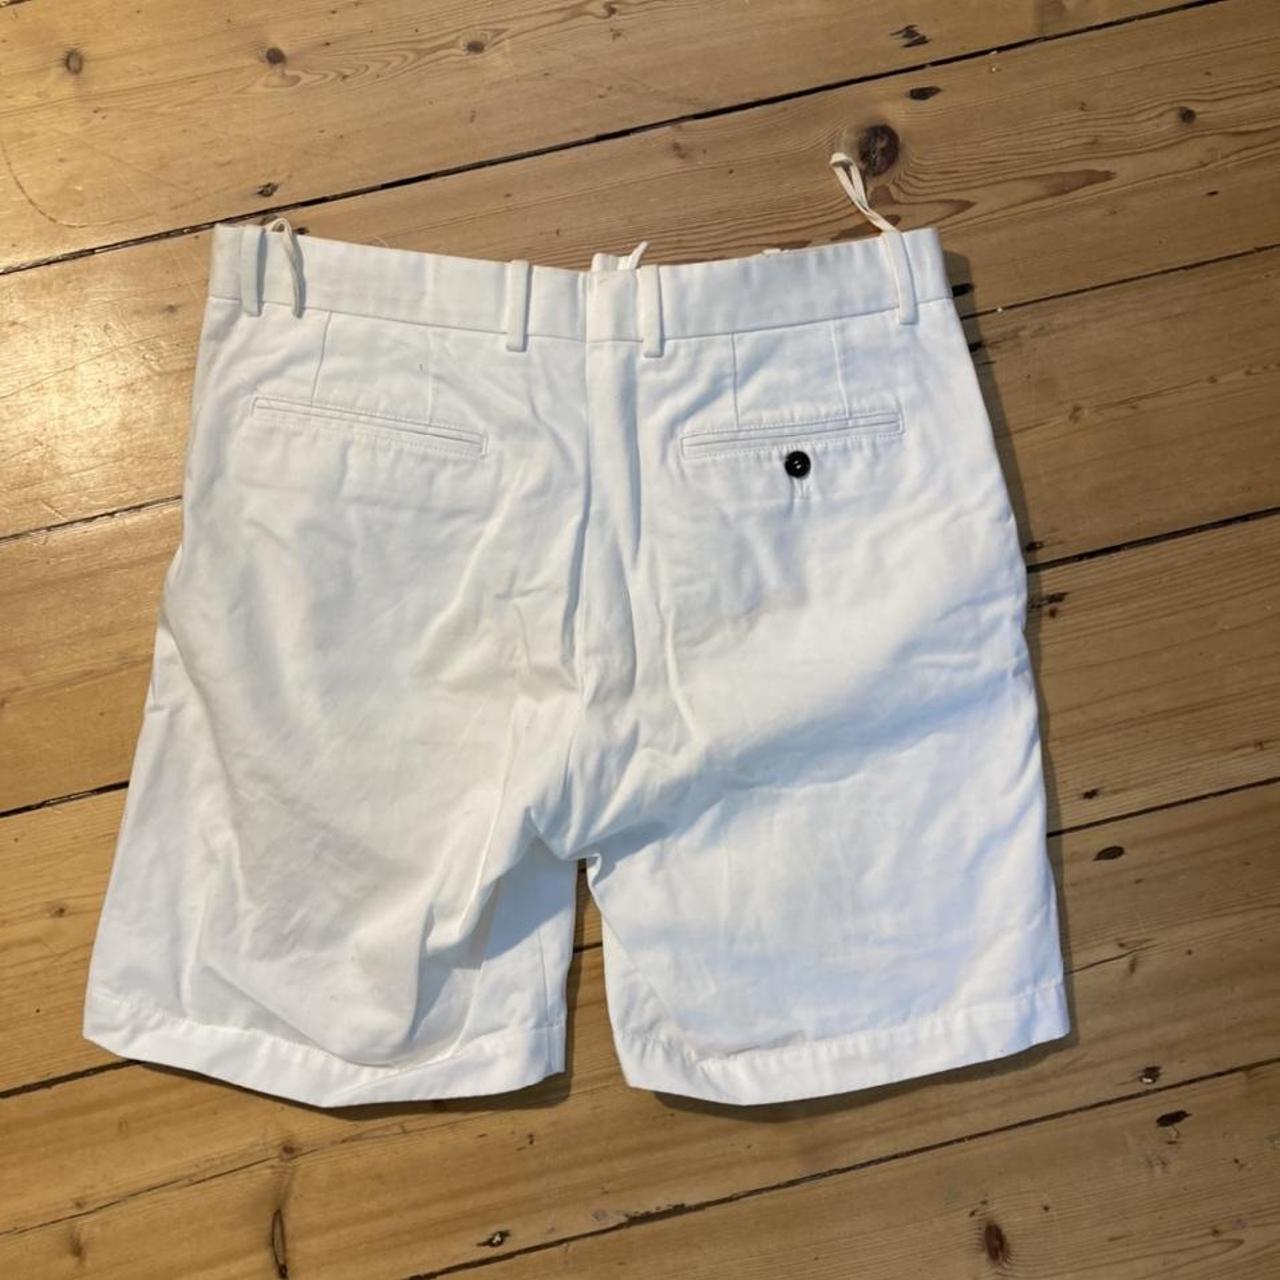 size 48 (around w30-32) marni shorts with a... - Depop